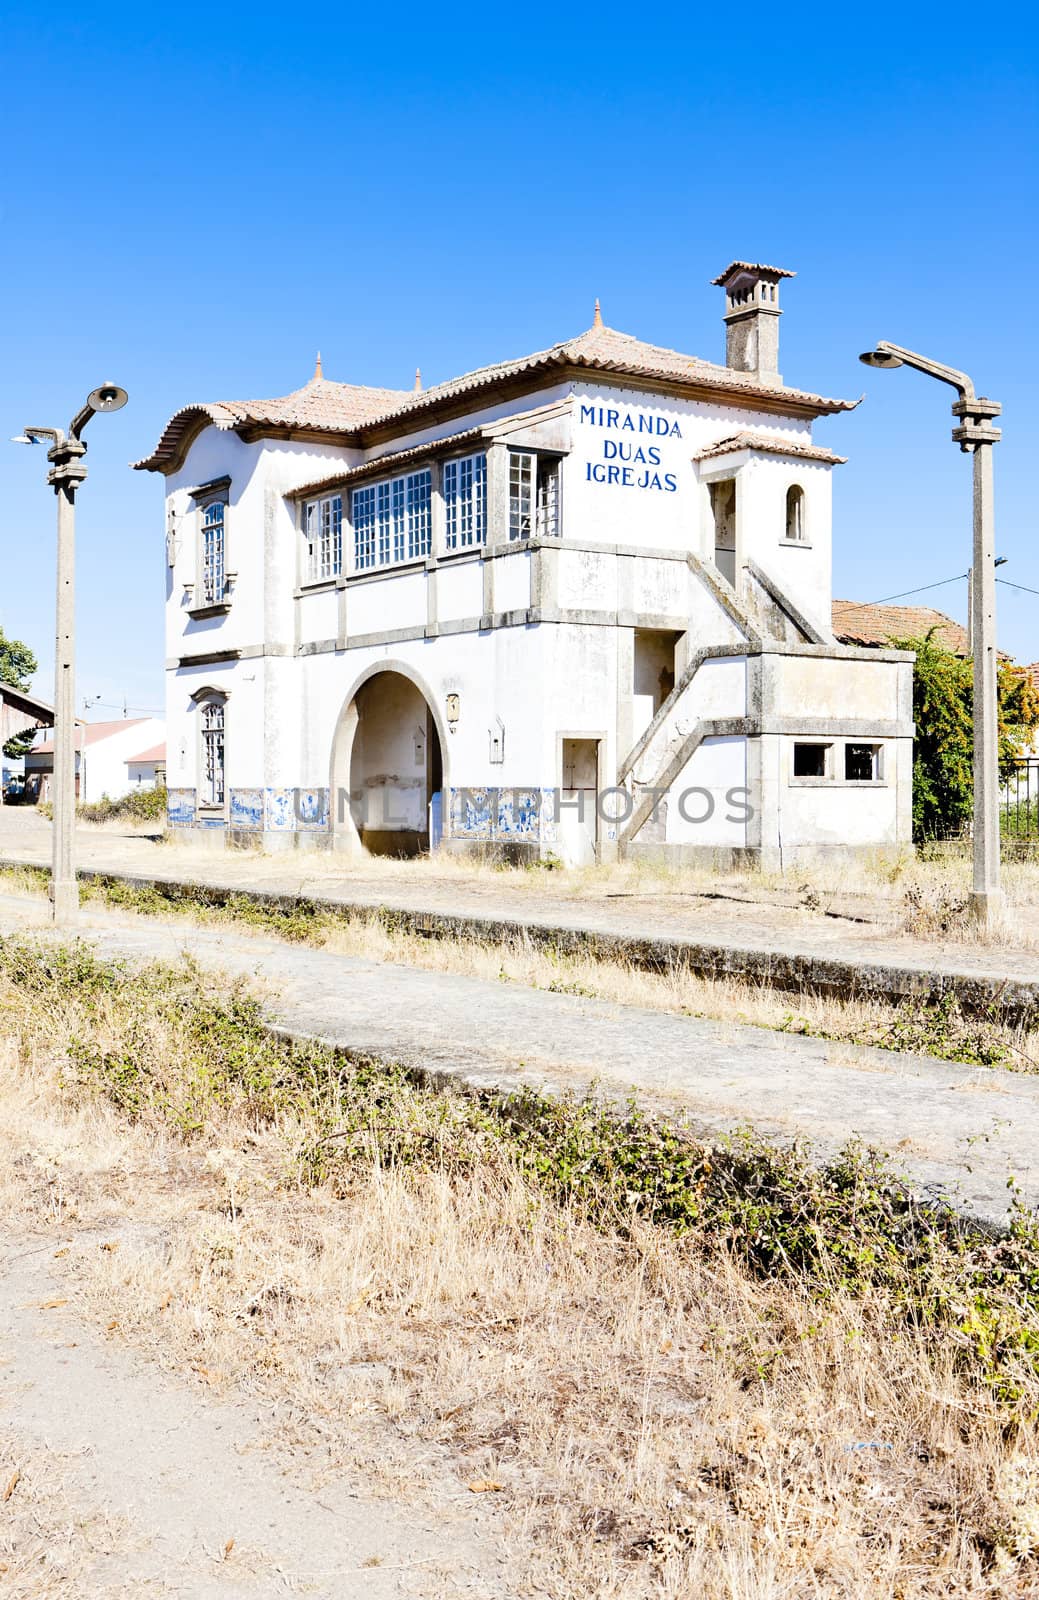 railway station of Duas Igrejas, Portugal by phbcz